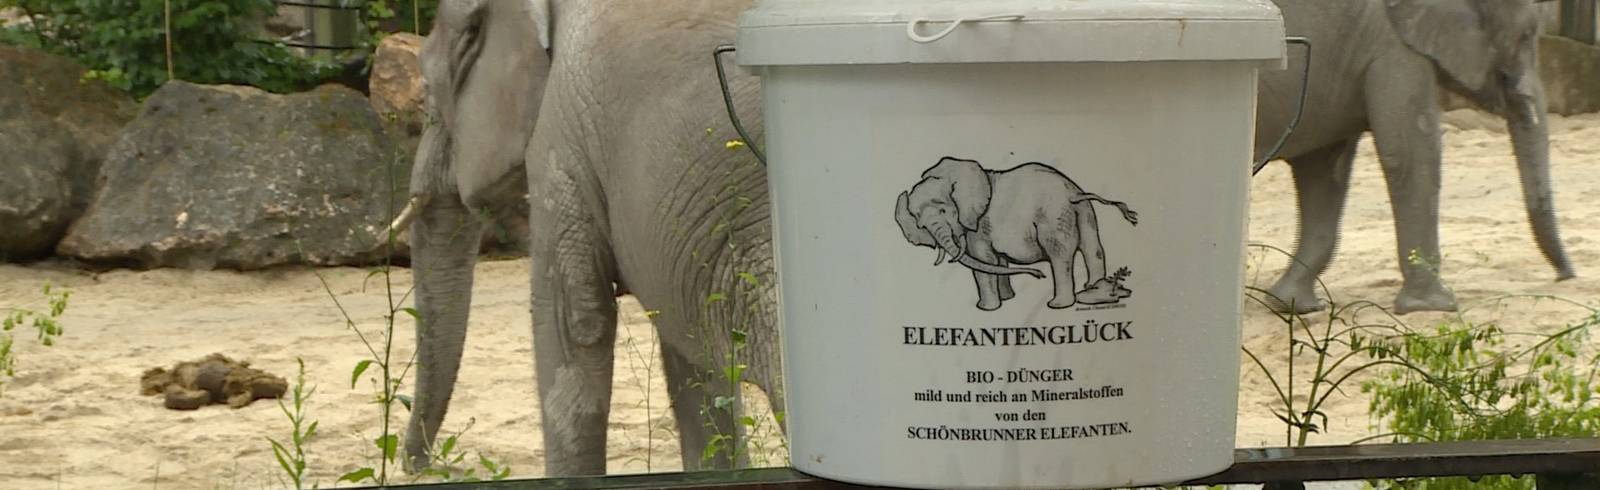 Elefanten-Kot als "Wundermittel" im Garten